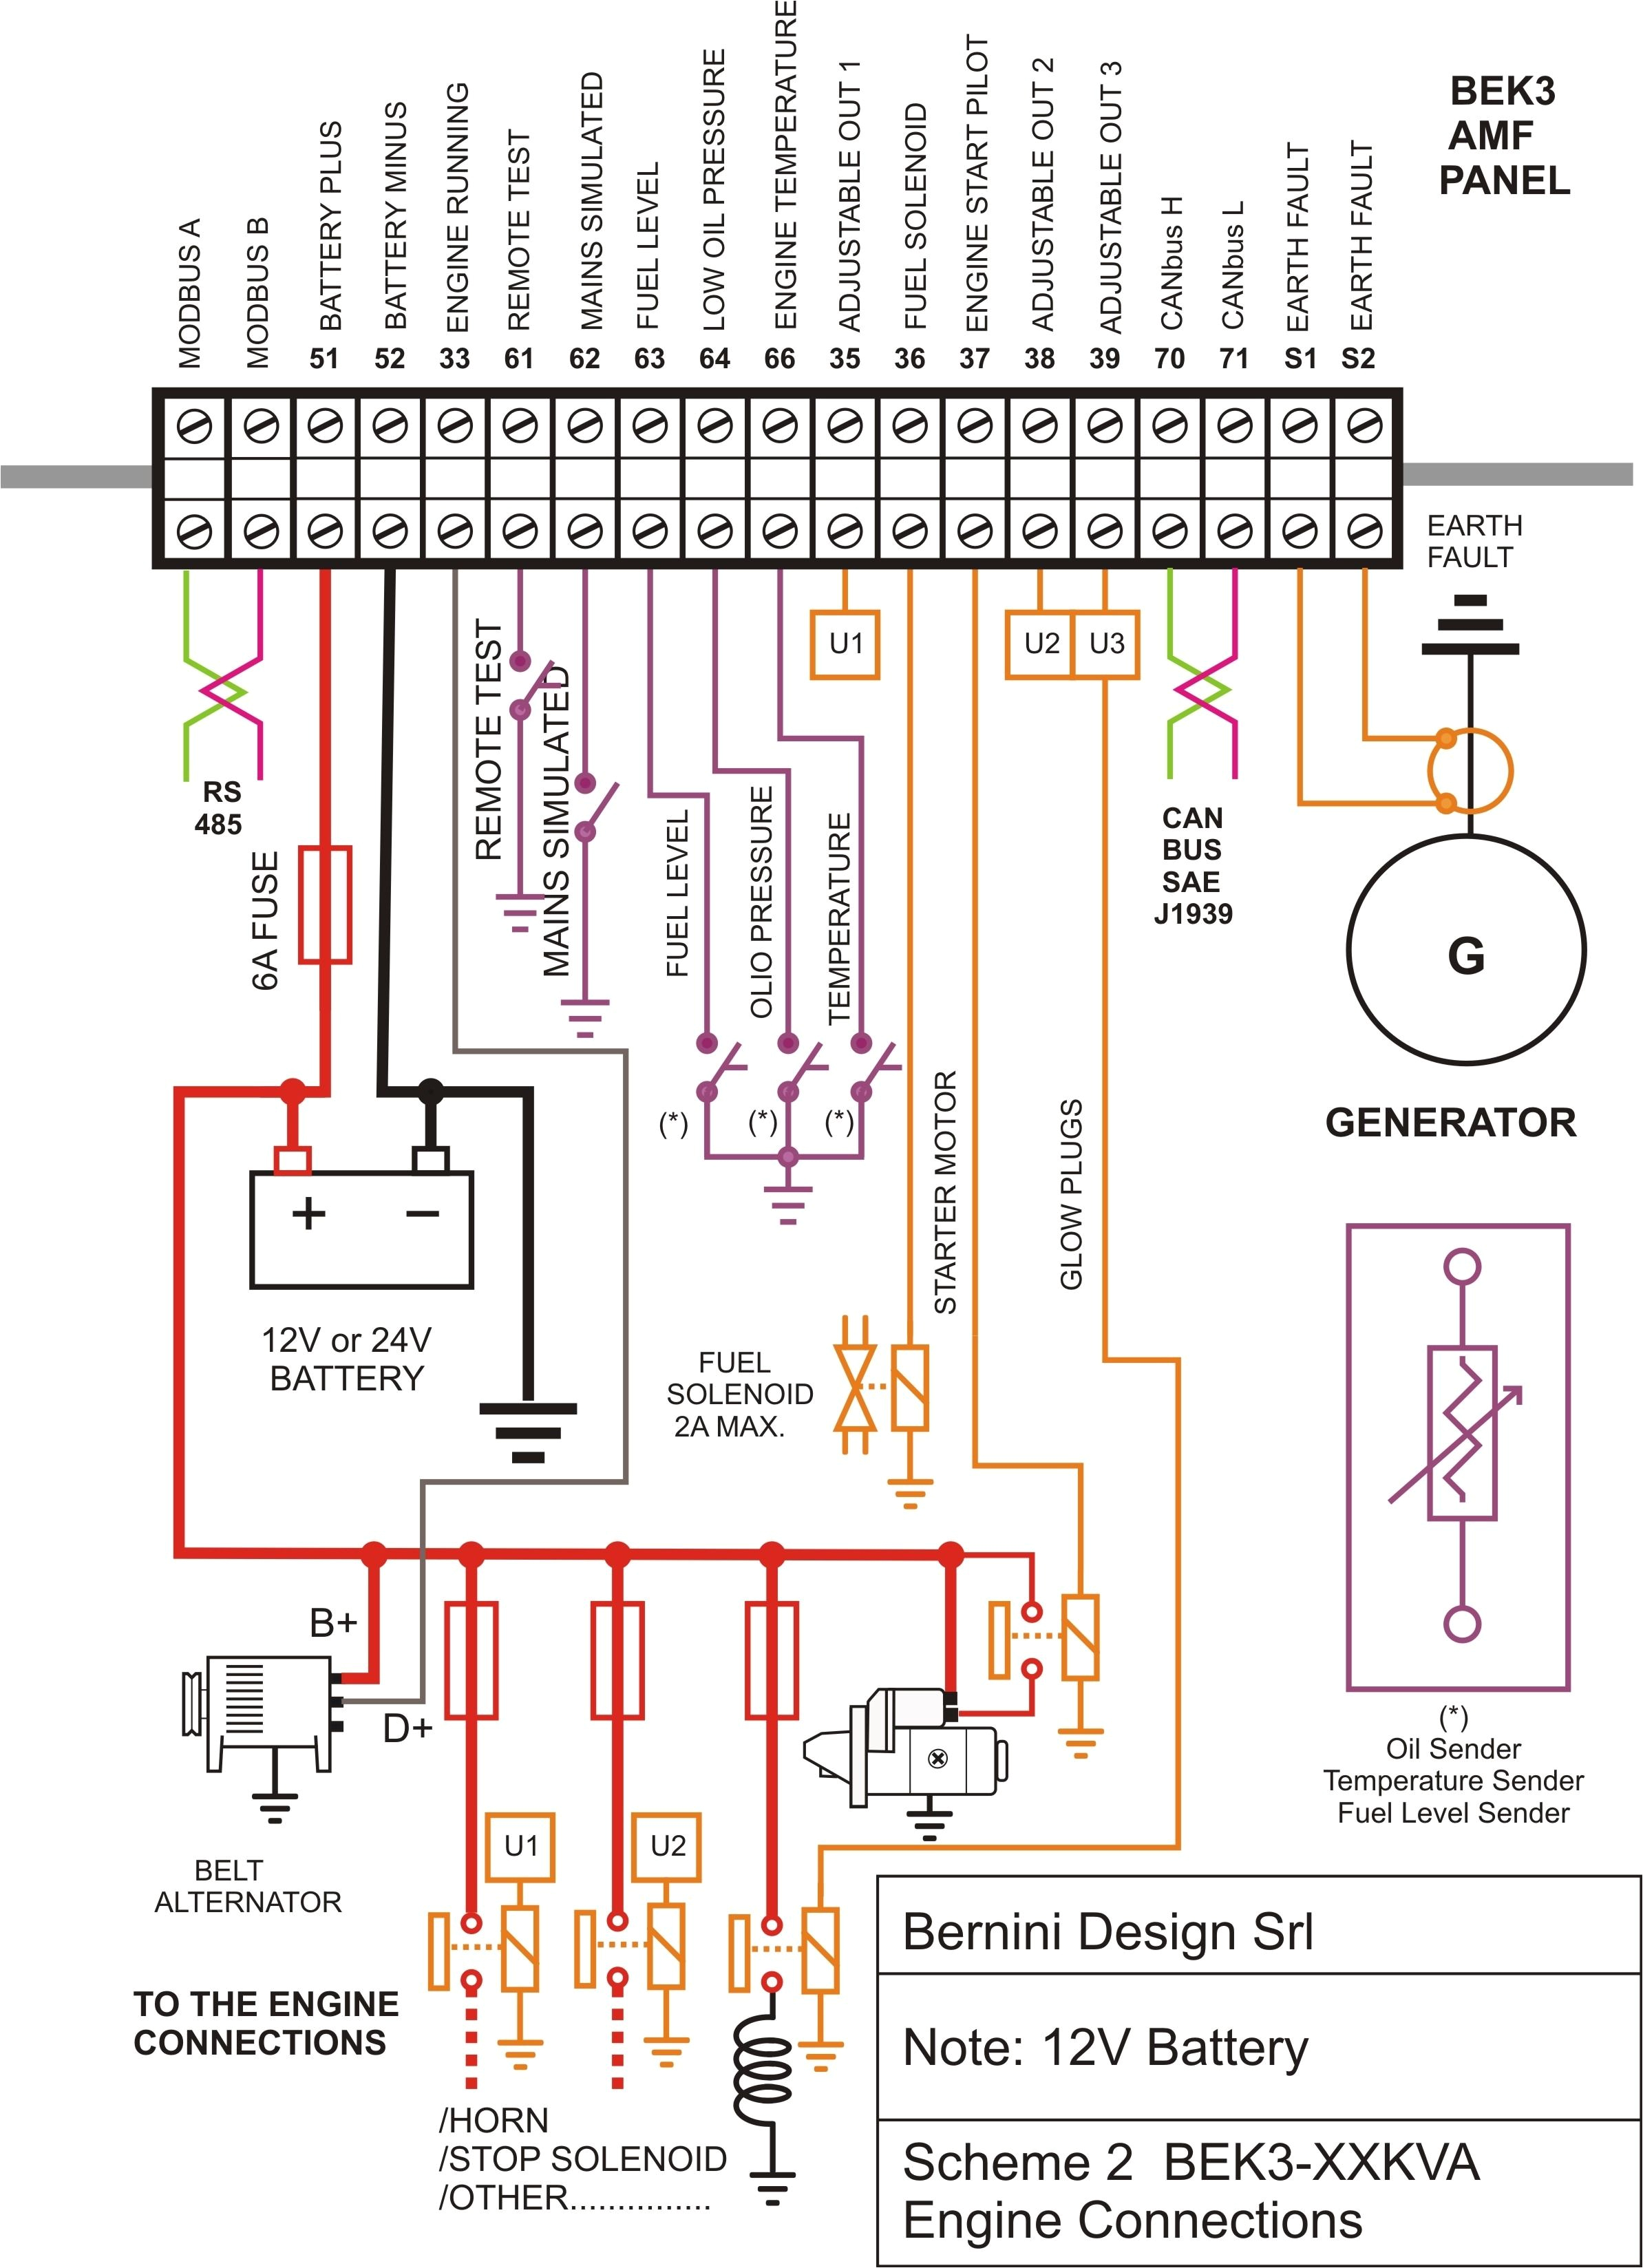 basic electrical wiring diagram pdf wiringdiagram org electrical wiring interconnection system pdf basic electrical wiring diagram